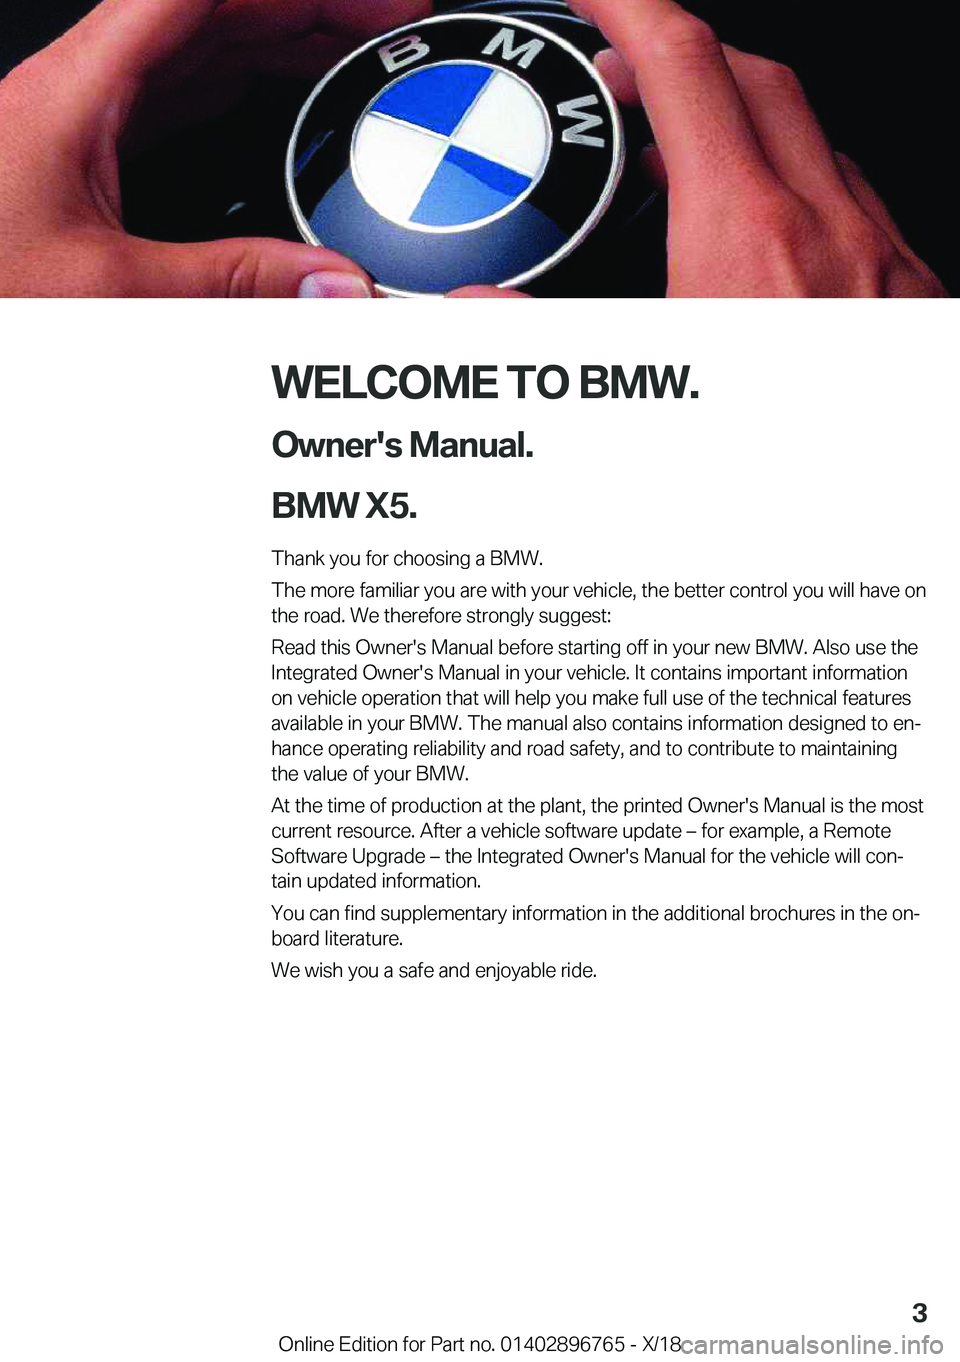 BMW X5 2019  Owners Manual �W�E�L�C�O�M�E��T�O��B�M�W�.�O�w�n�e�r�'�s��M�a�n�u�a�l�.
�B�M�W��X�5�.
�T�h�a�n�k��y�o�u��f�o�r��c�h�o�o�s�i�n�g��a��B�M�W�.
�T�h�e��m�o�r�e��f�a�m�i�l�i�a�r��y�o�u��a�r�e��w�i�t�h�